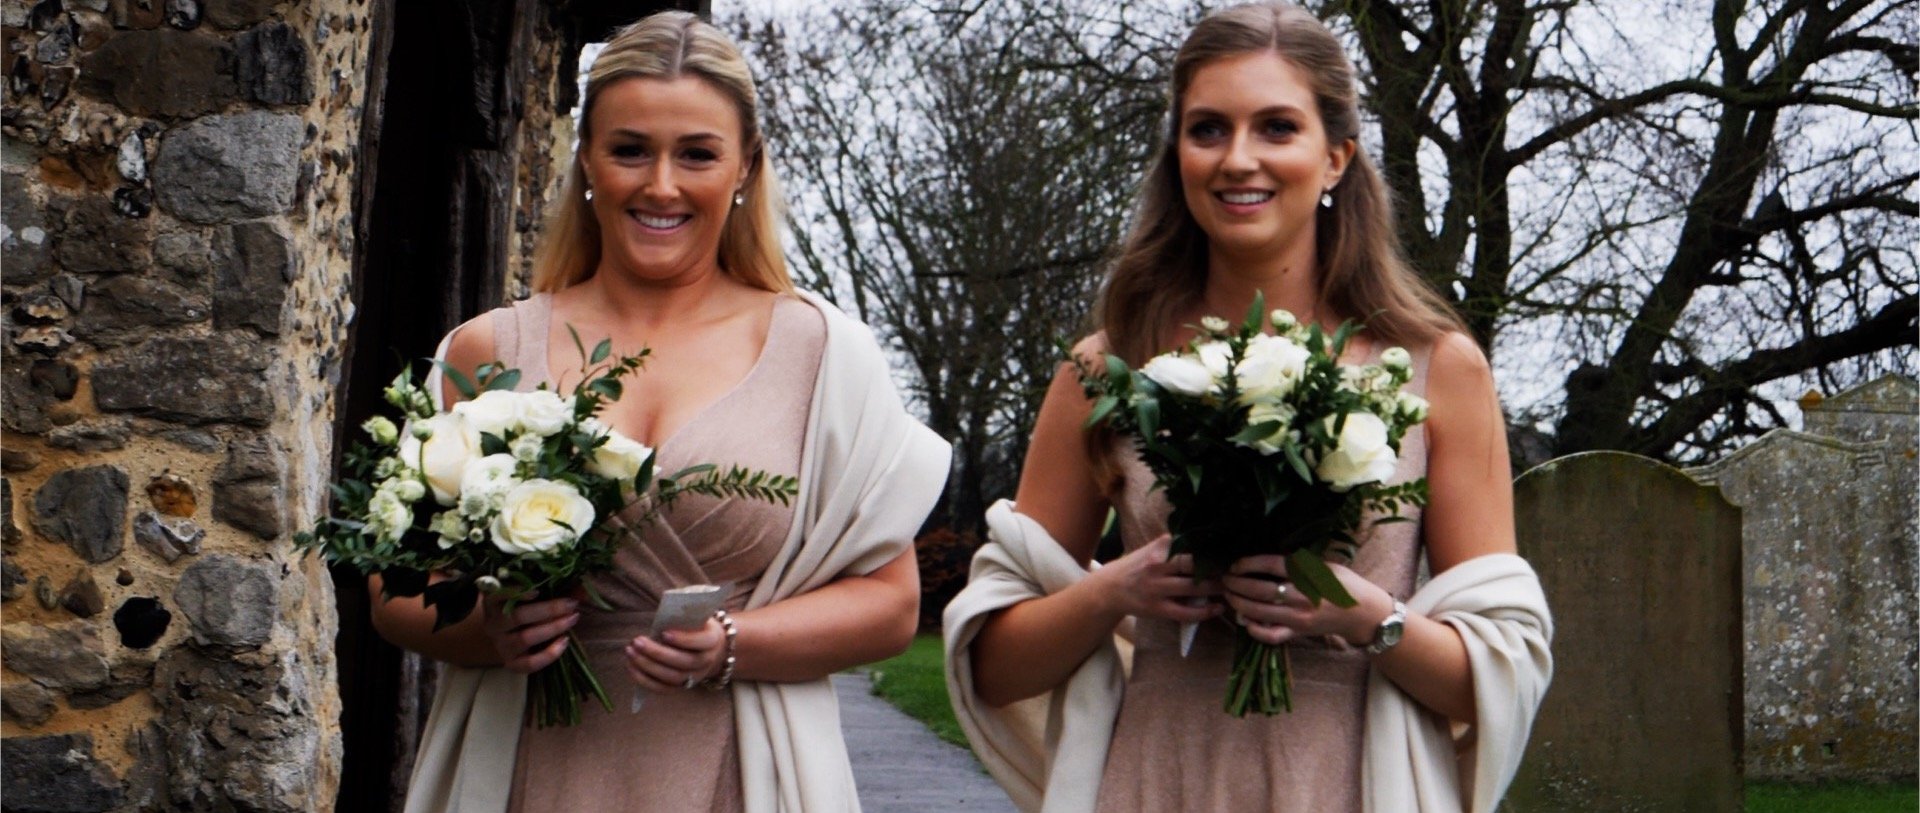 The bridesmaids Essex wedding videography.jpg